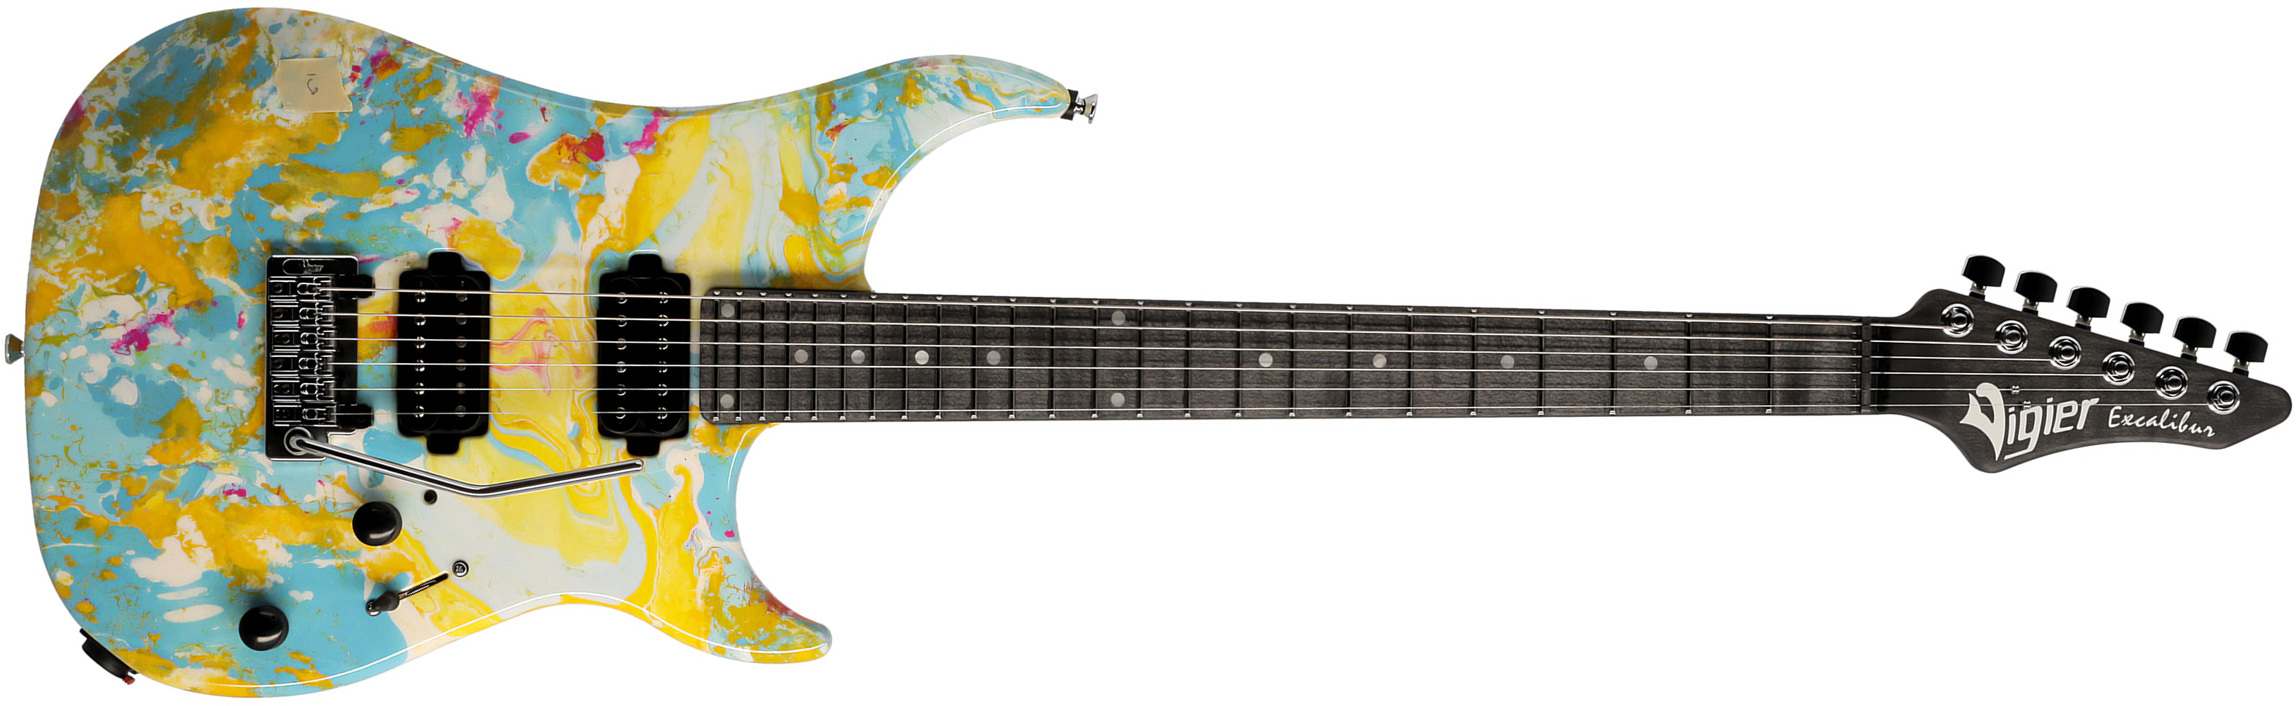 Vigier Excalibur Thirteen 2h Trem Mn - Rock Art Yellow Blue White - E-Gitarre in Str-Form - Main picture